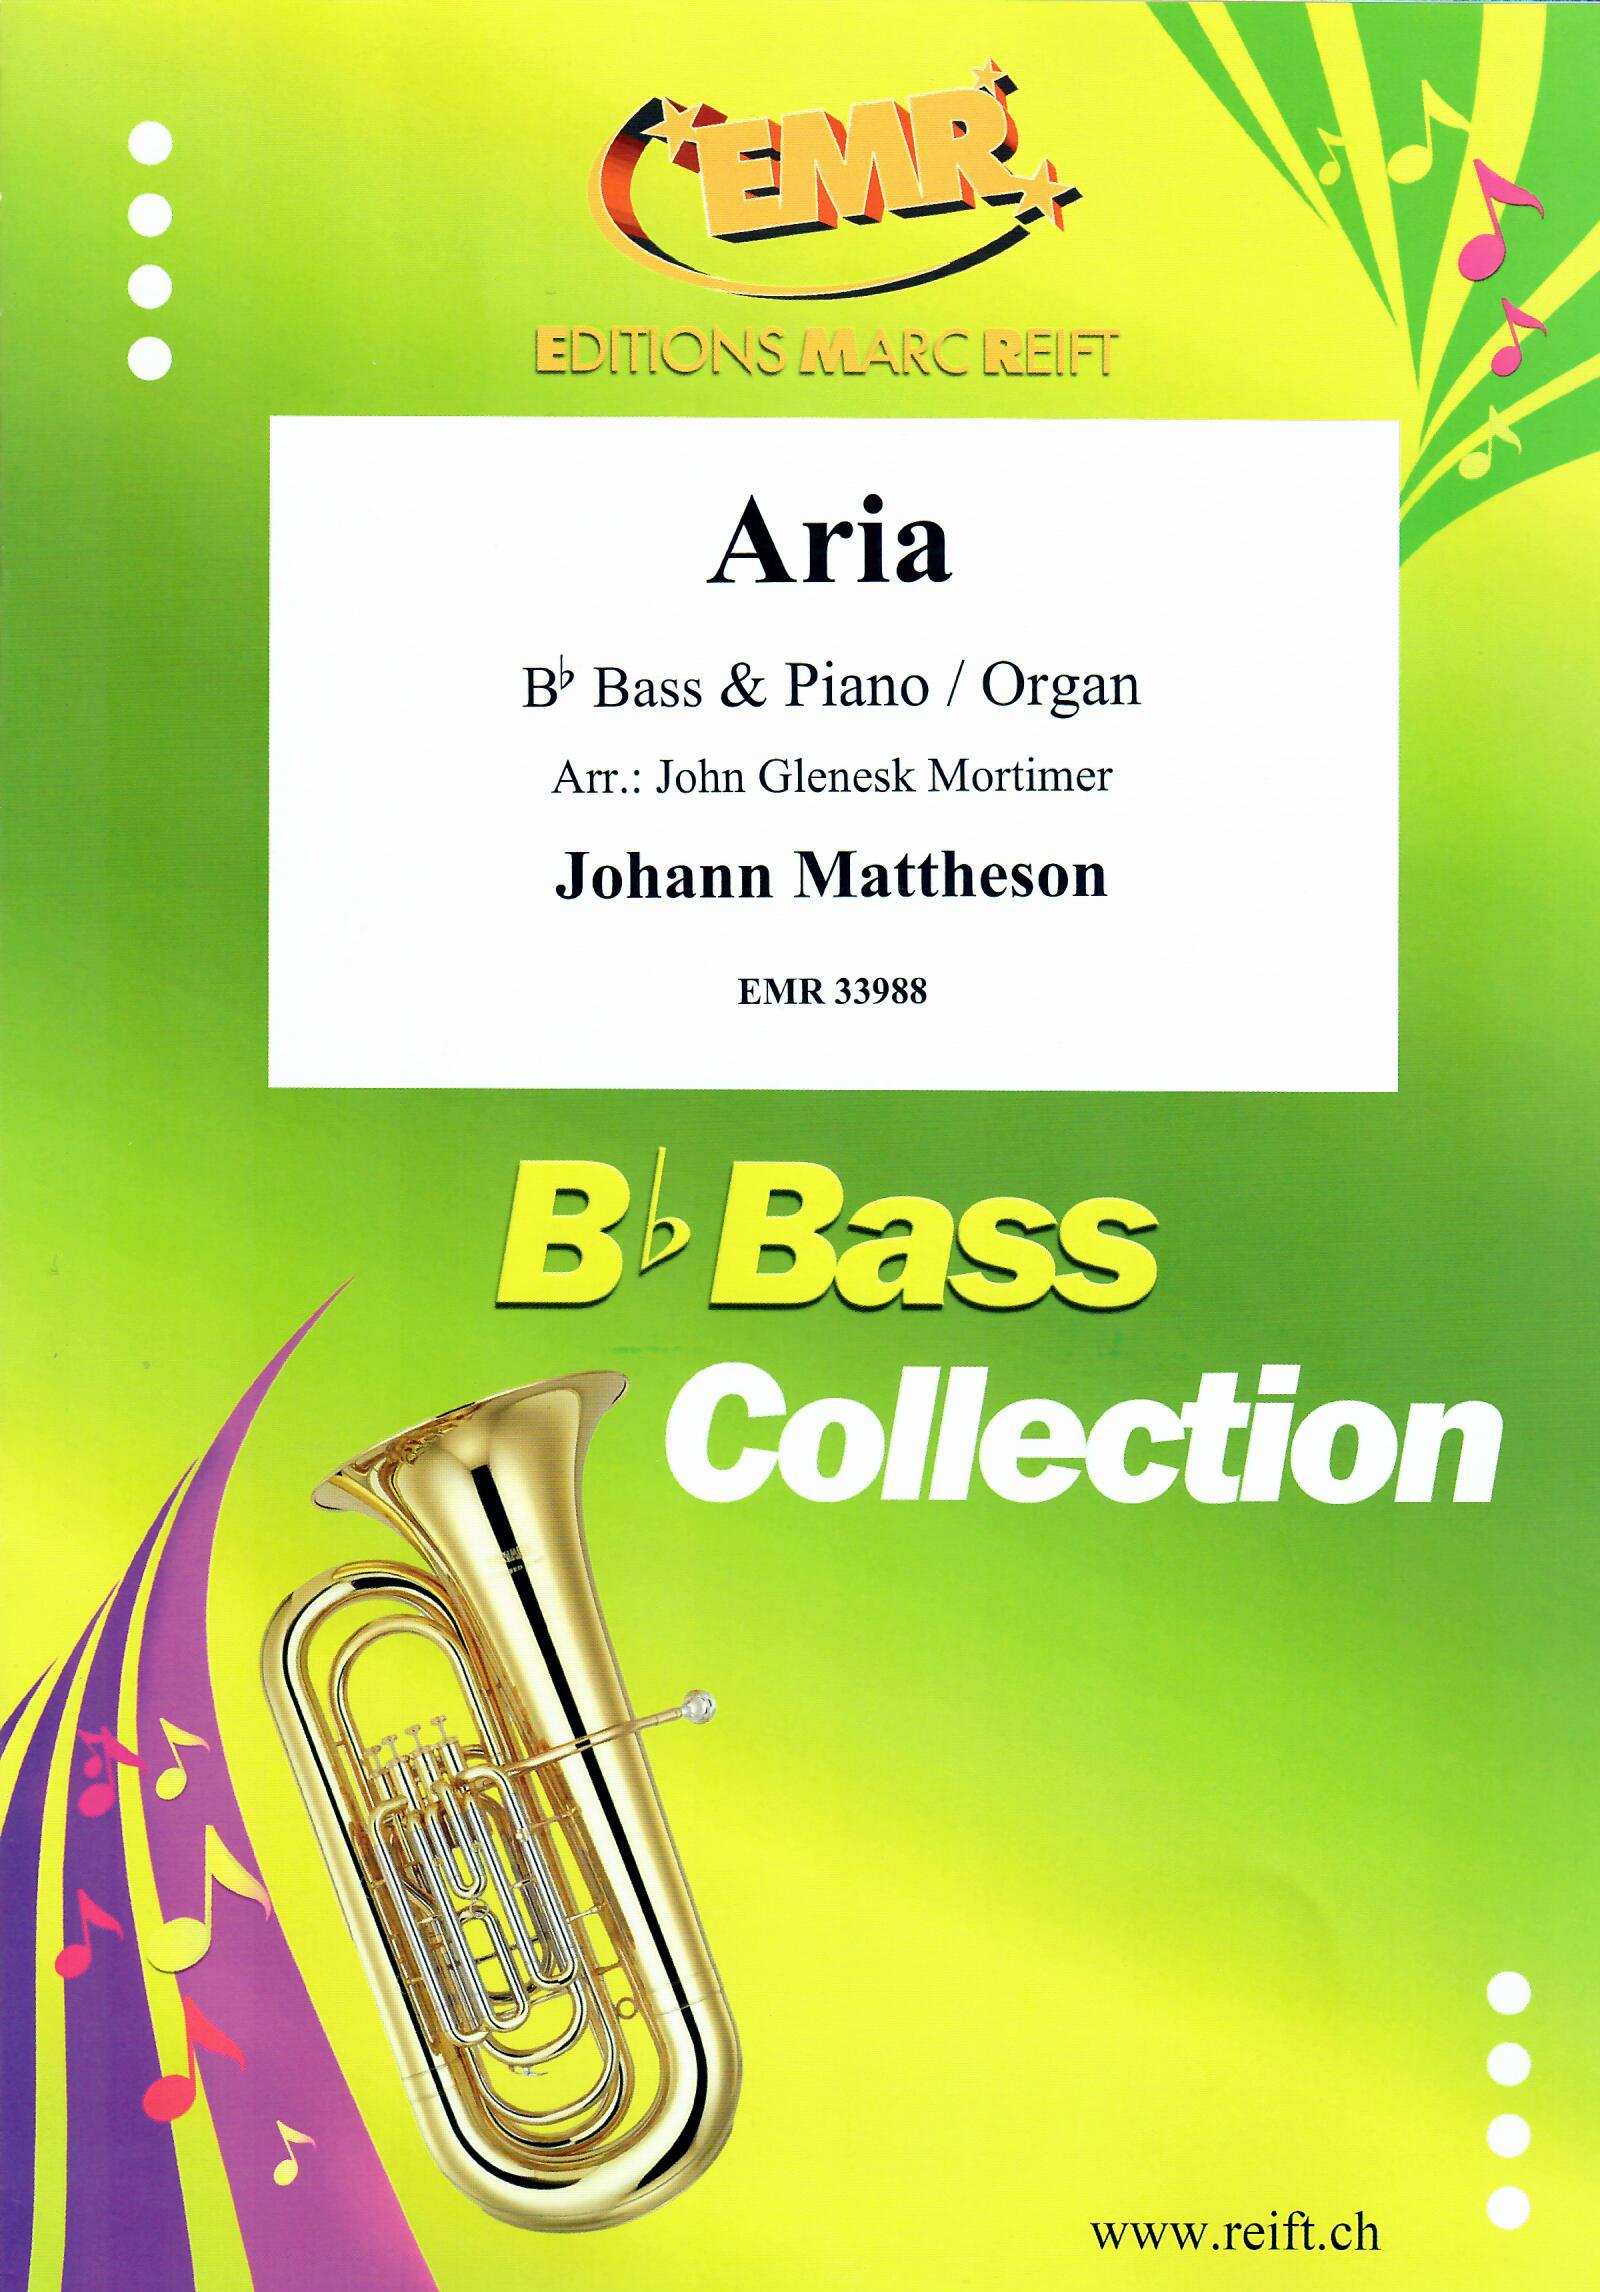 ARIA, SOLOS - E♭. Bass